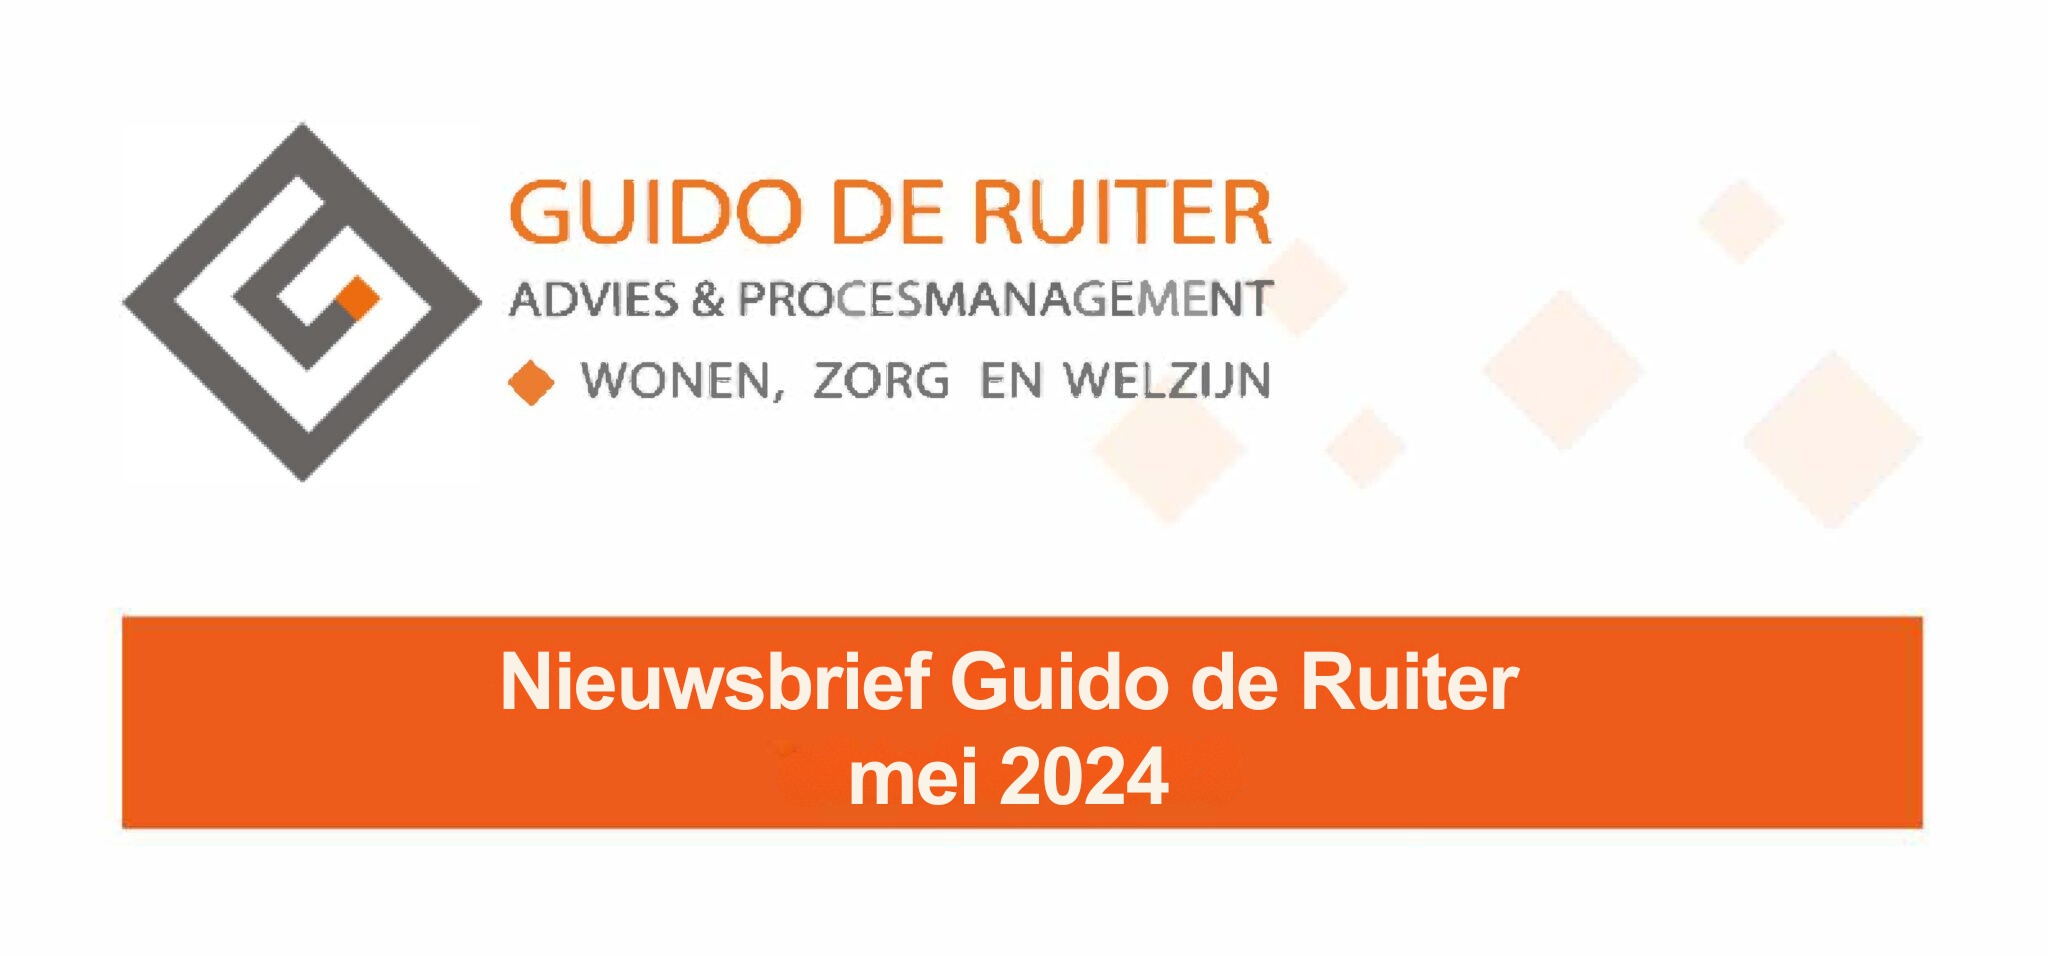 Nieuwsbrief Guido de Ruiter Mei 2024 canva